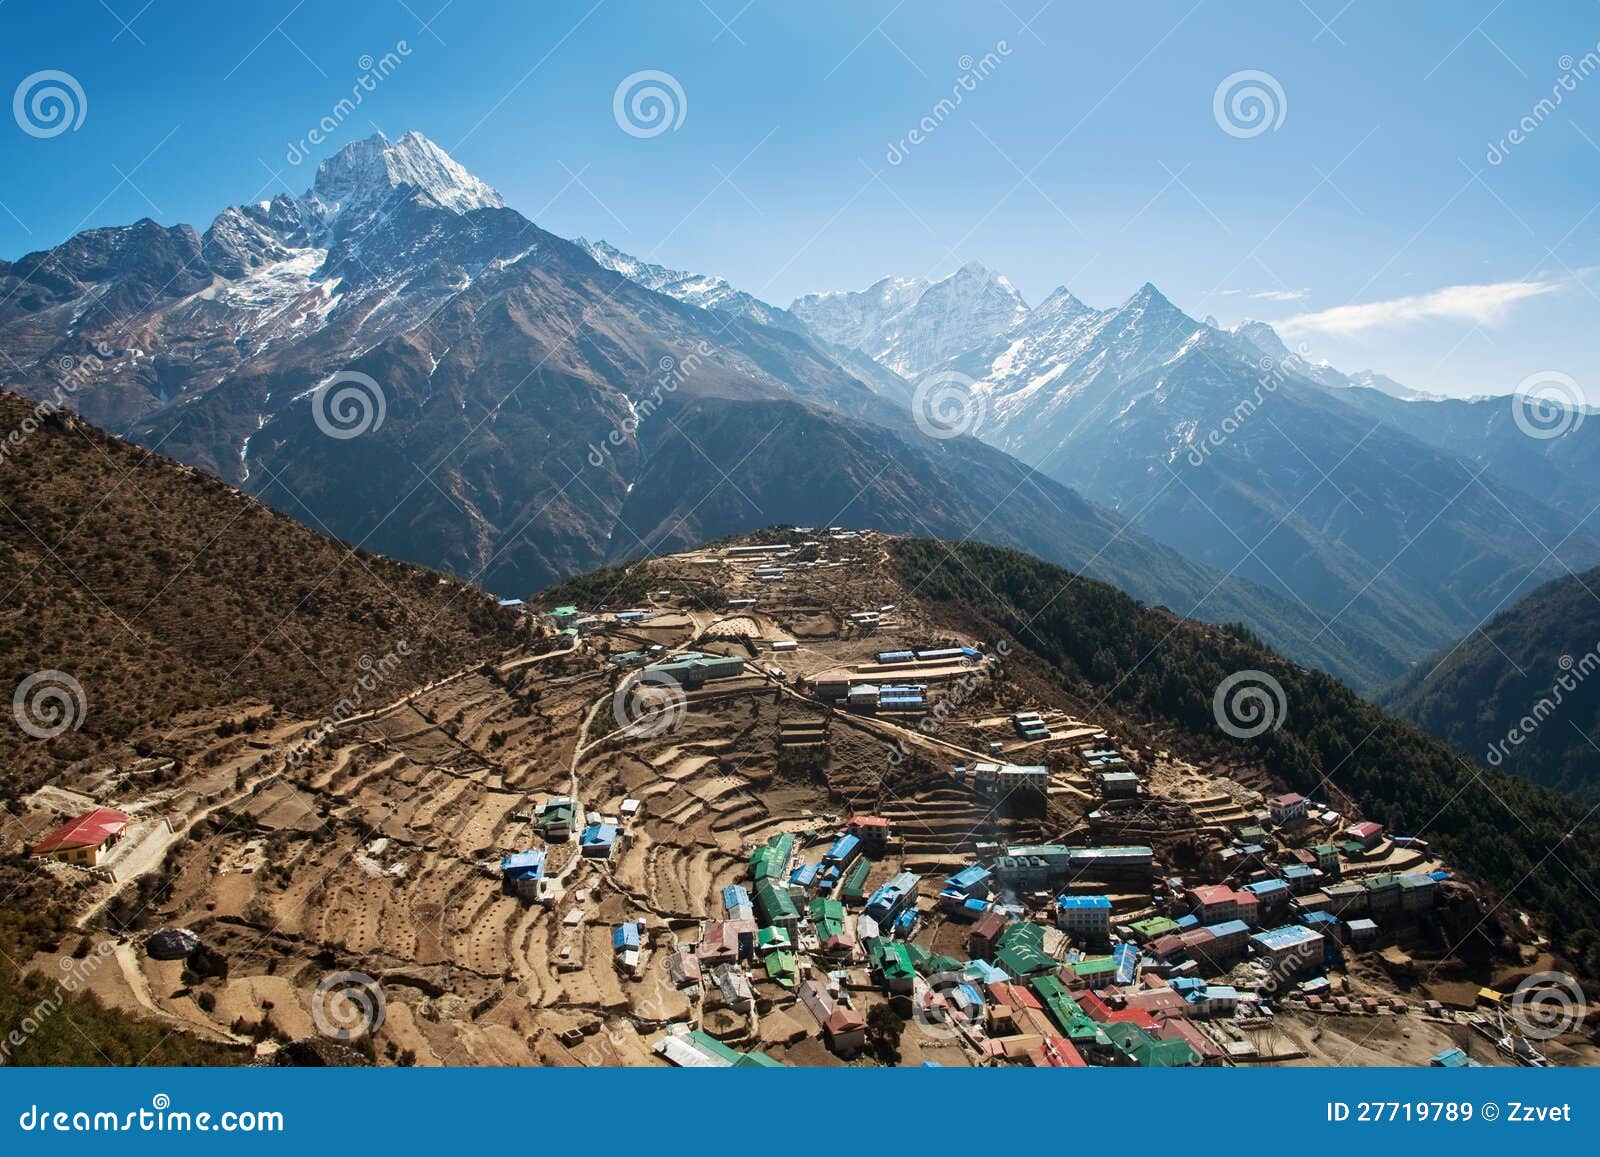 namche bazar view, nepal